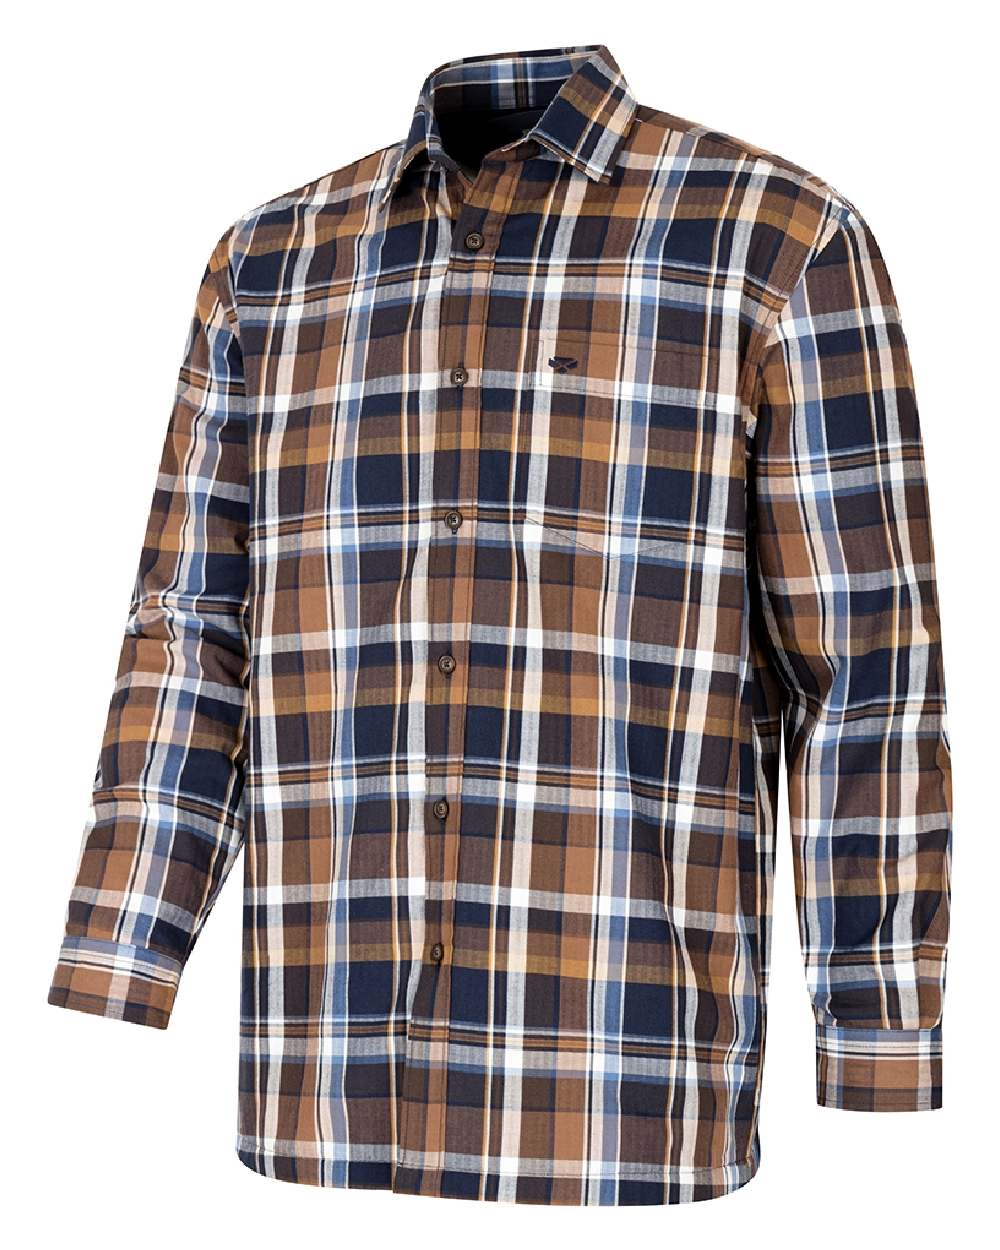 Hoggs of Fife Arran Micro Fleece Lined 100% Cotton Shirt in Navy/Brown Check 